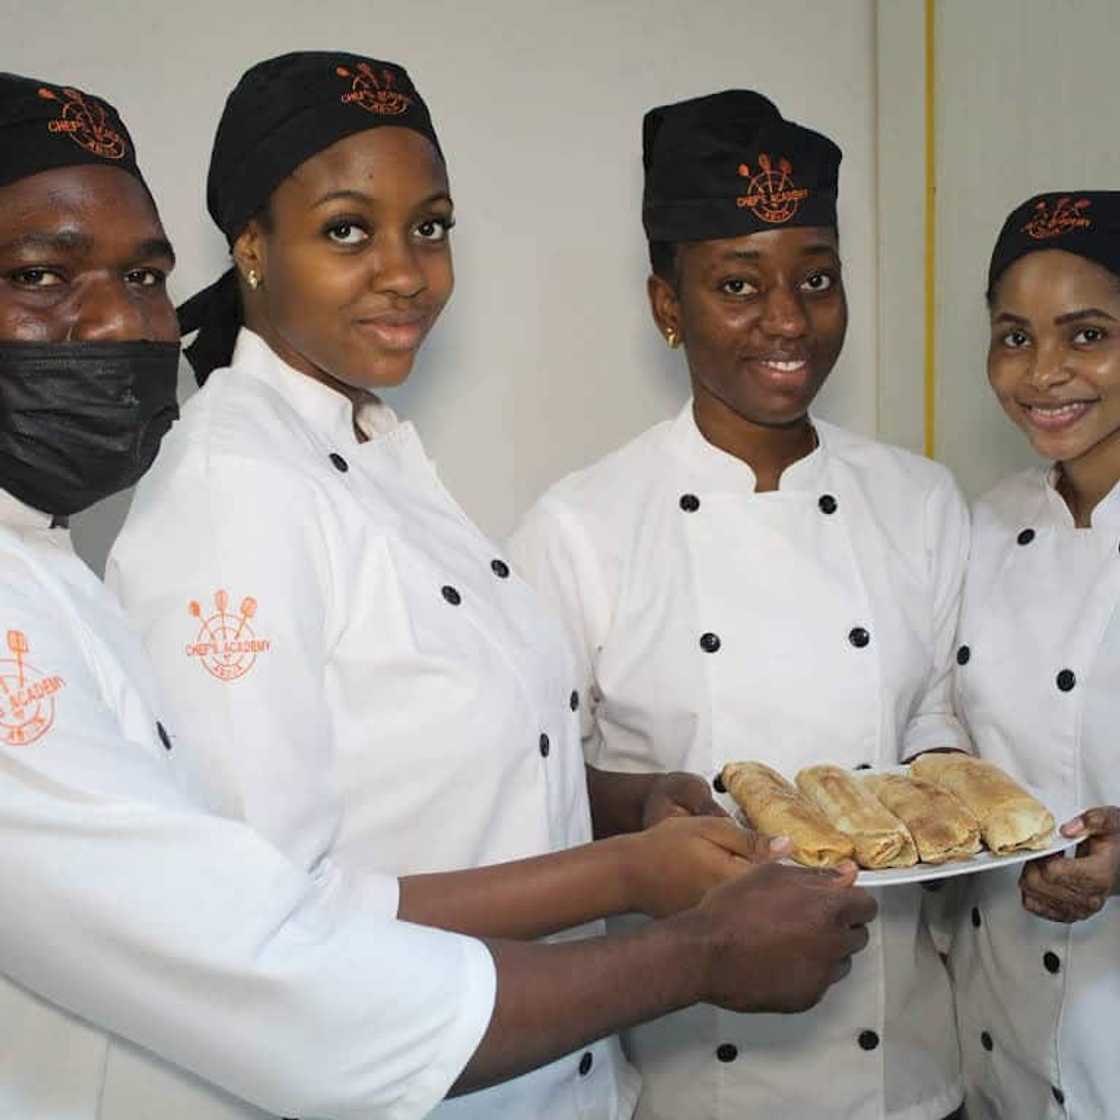 Culinary schools in Africa